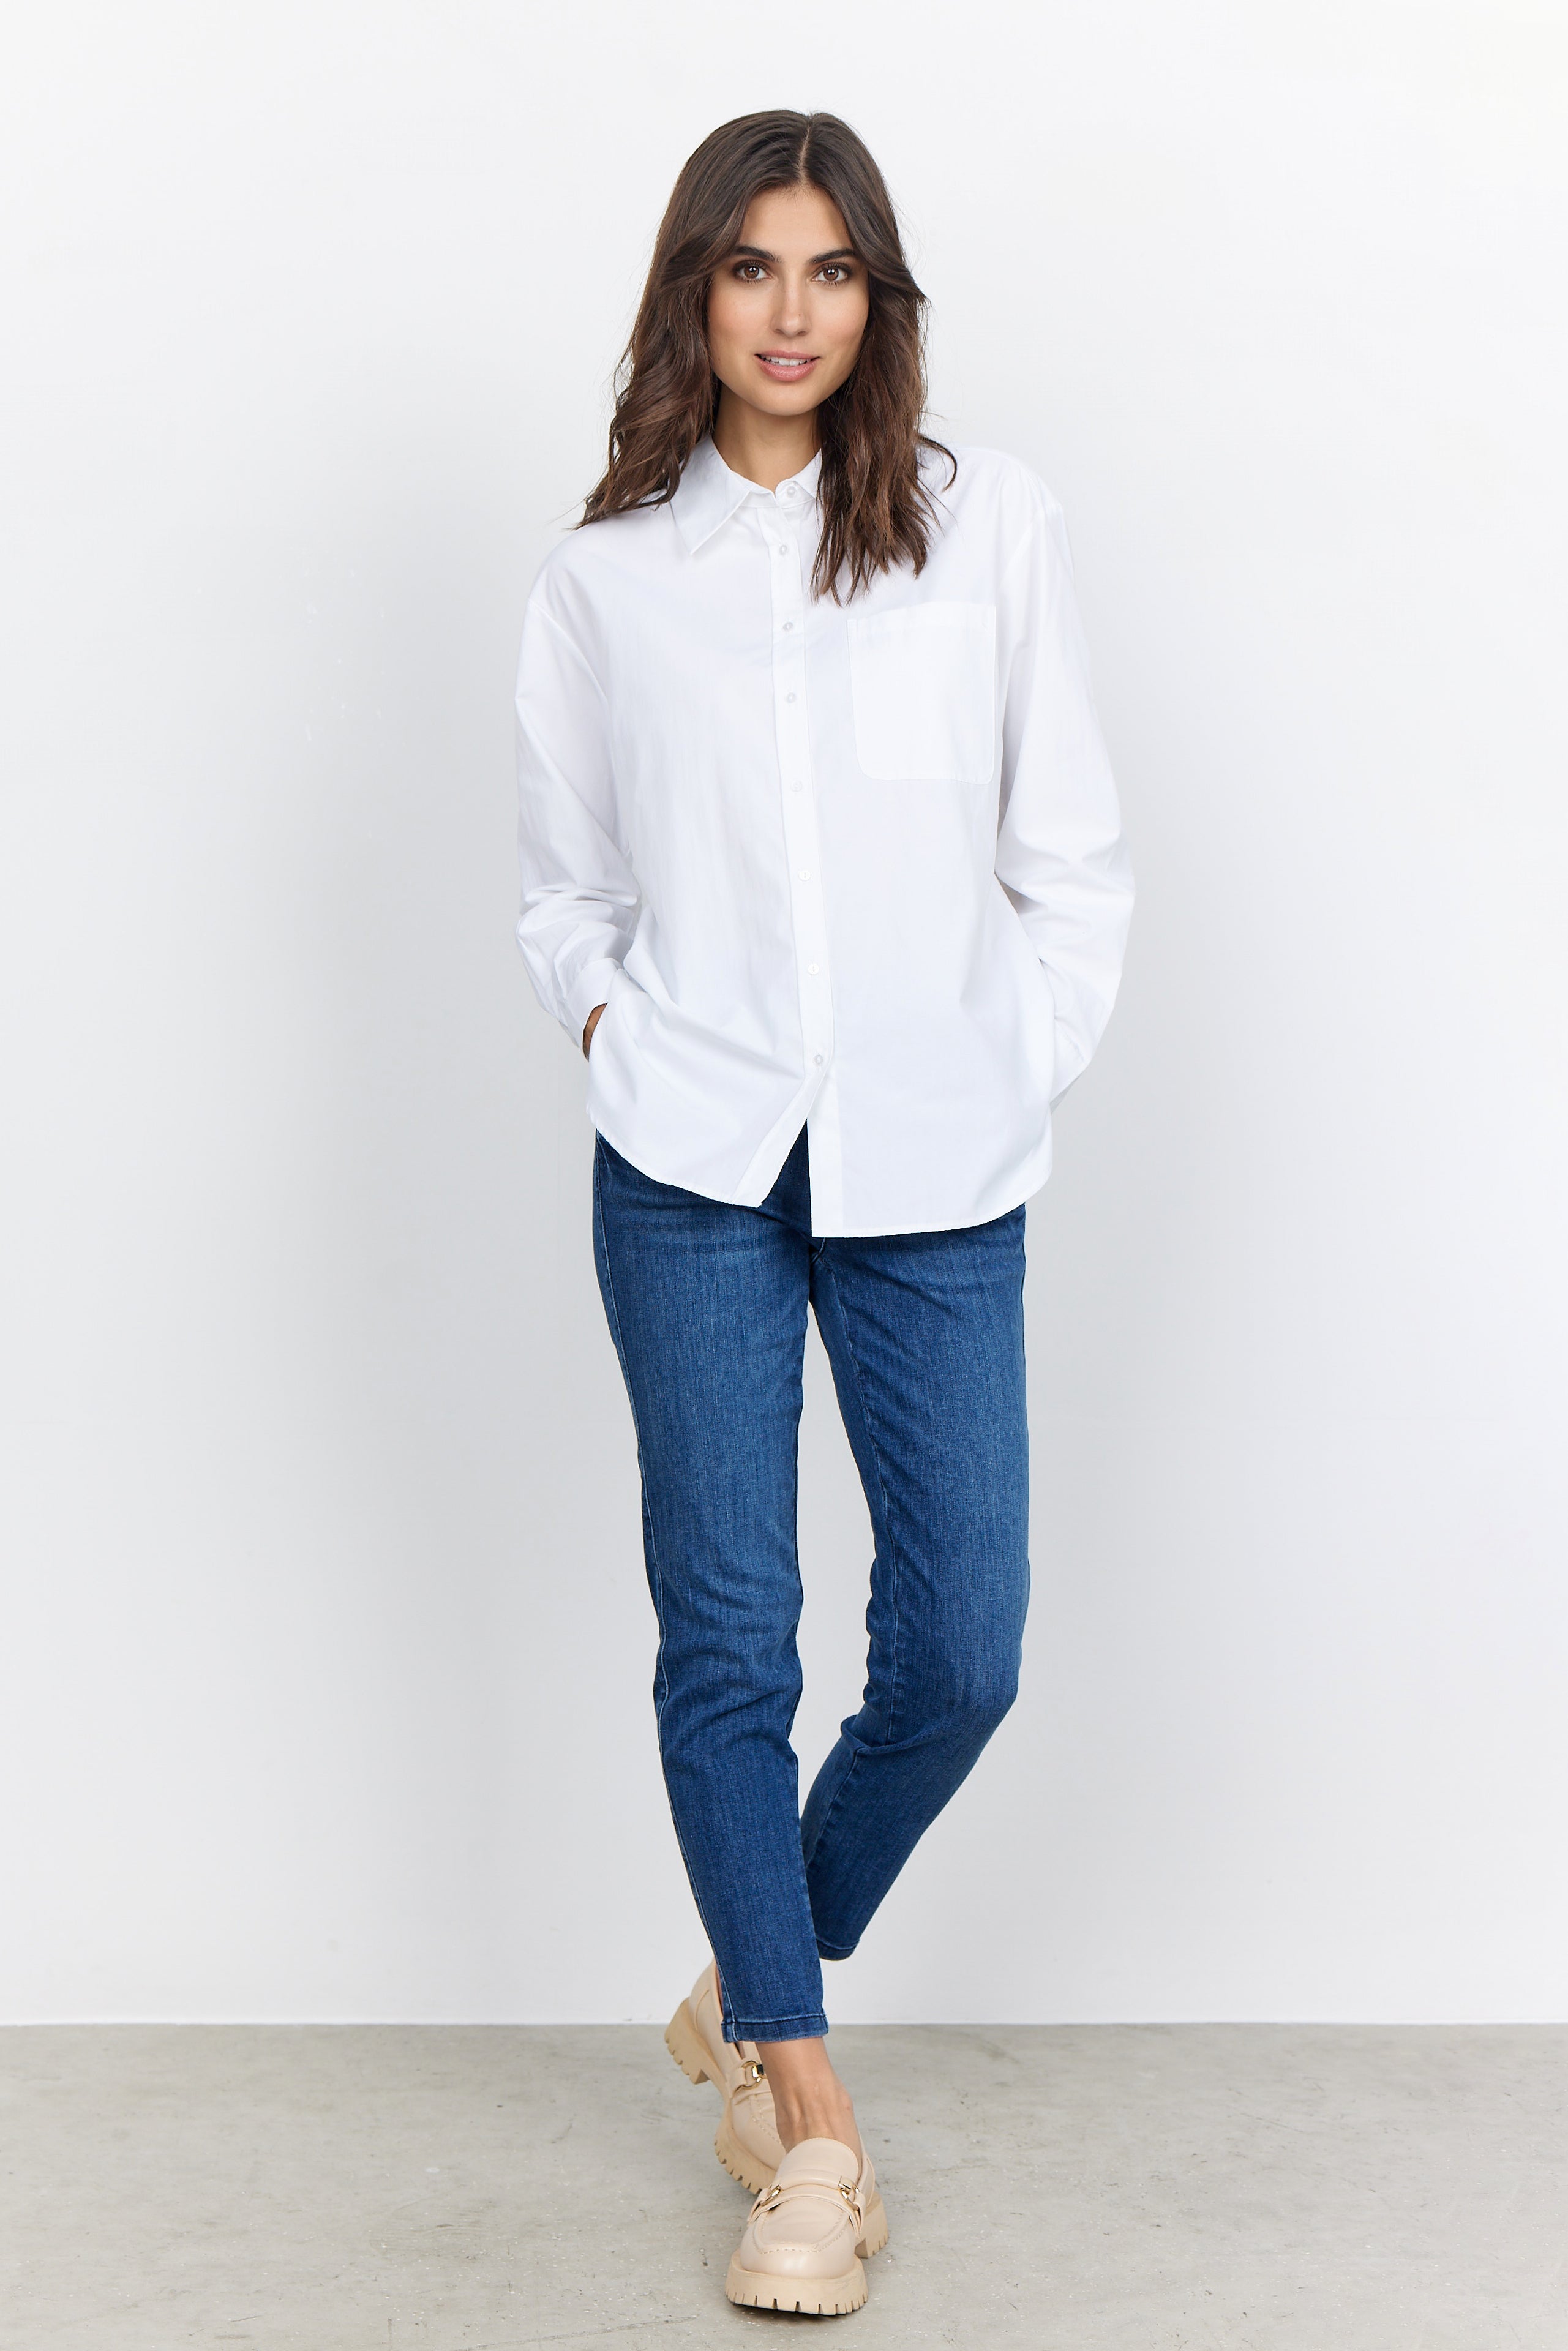 Soya Concept Netti37 Shirt (White)